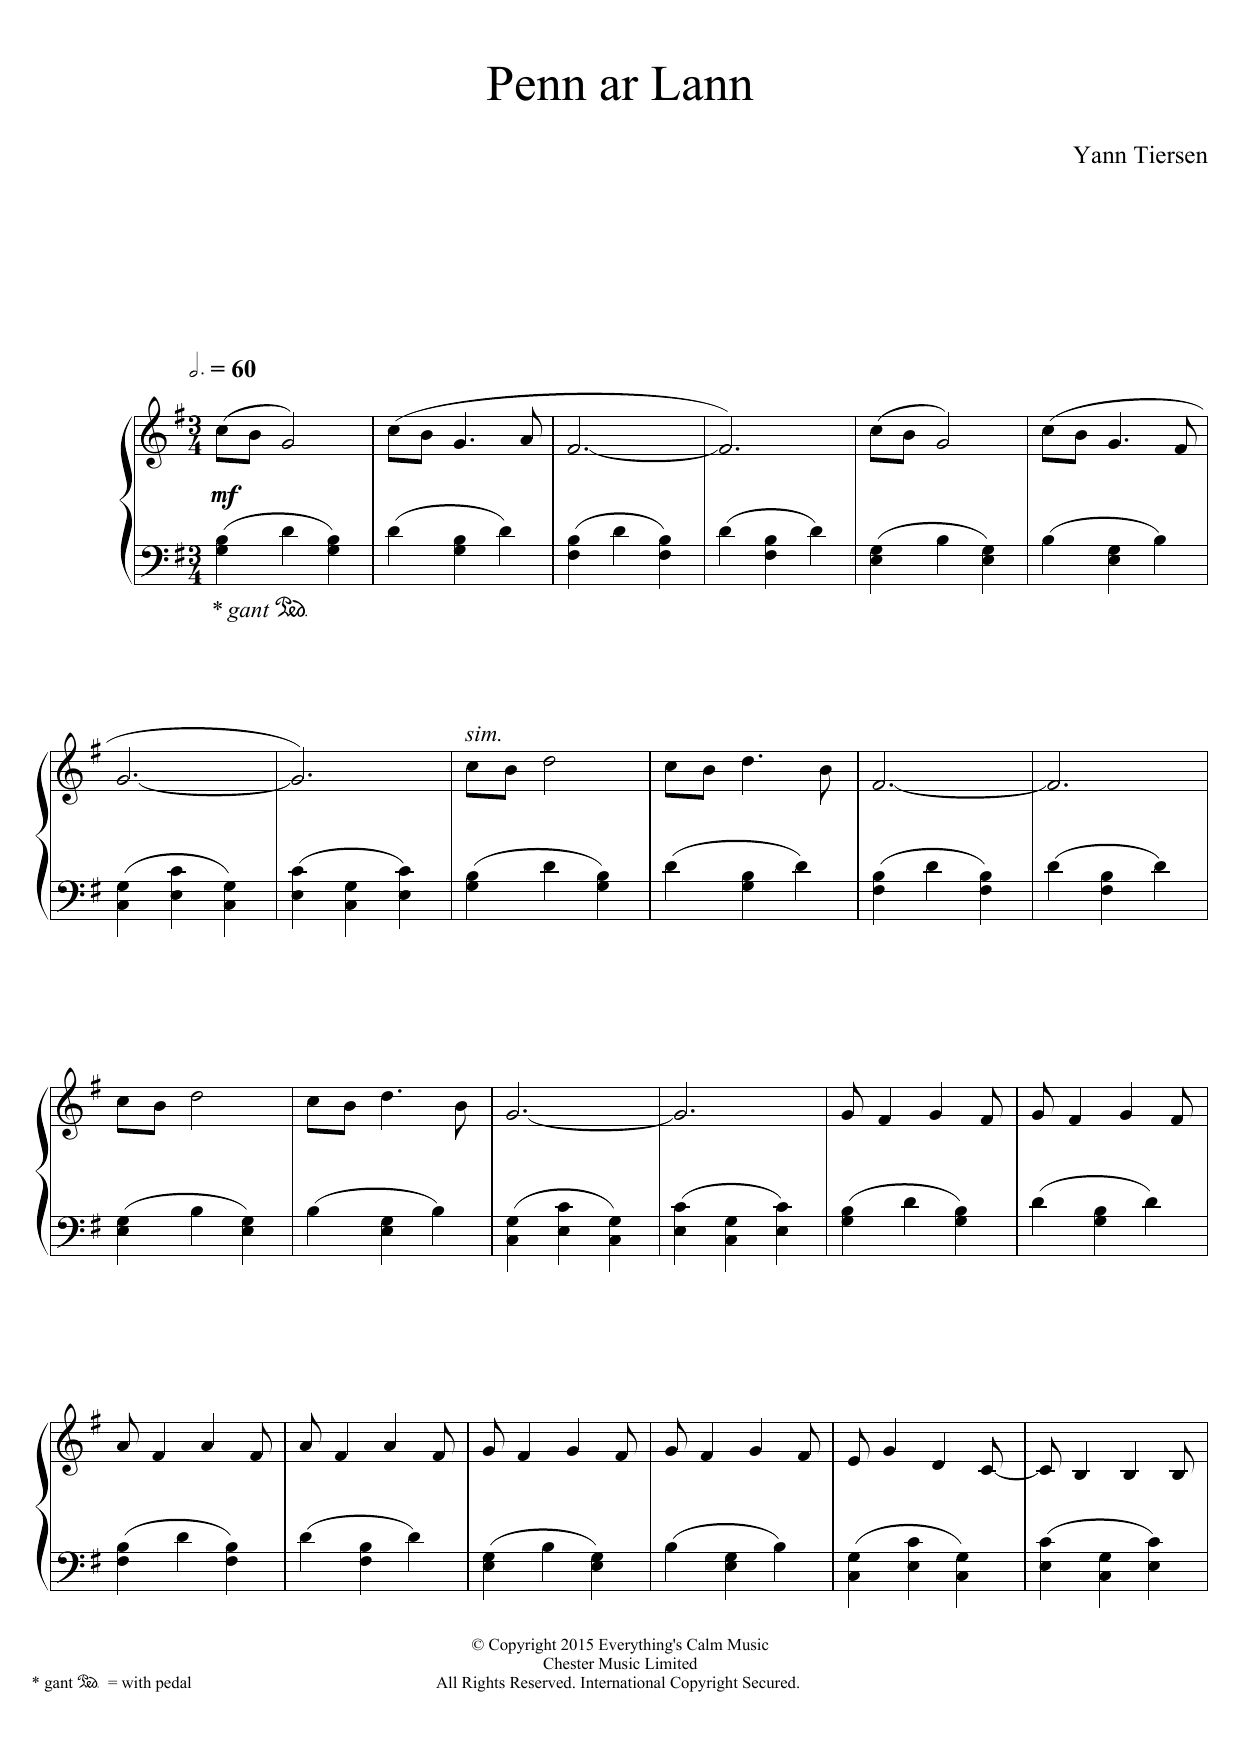 Download Yann Tiersen Penn Ar Lann Sheet Music and learn how to play Piano PDF digital score in minutes